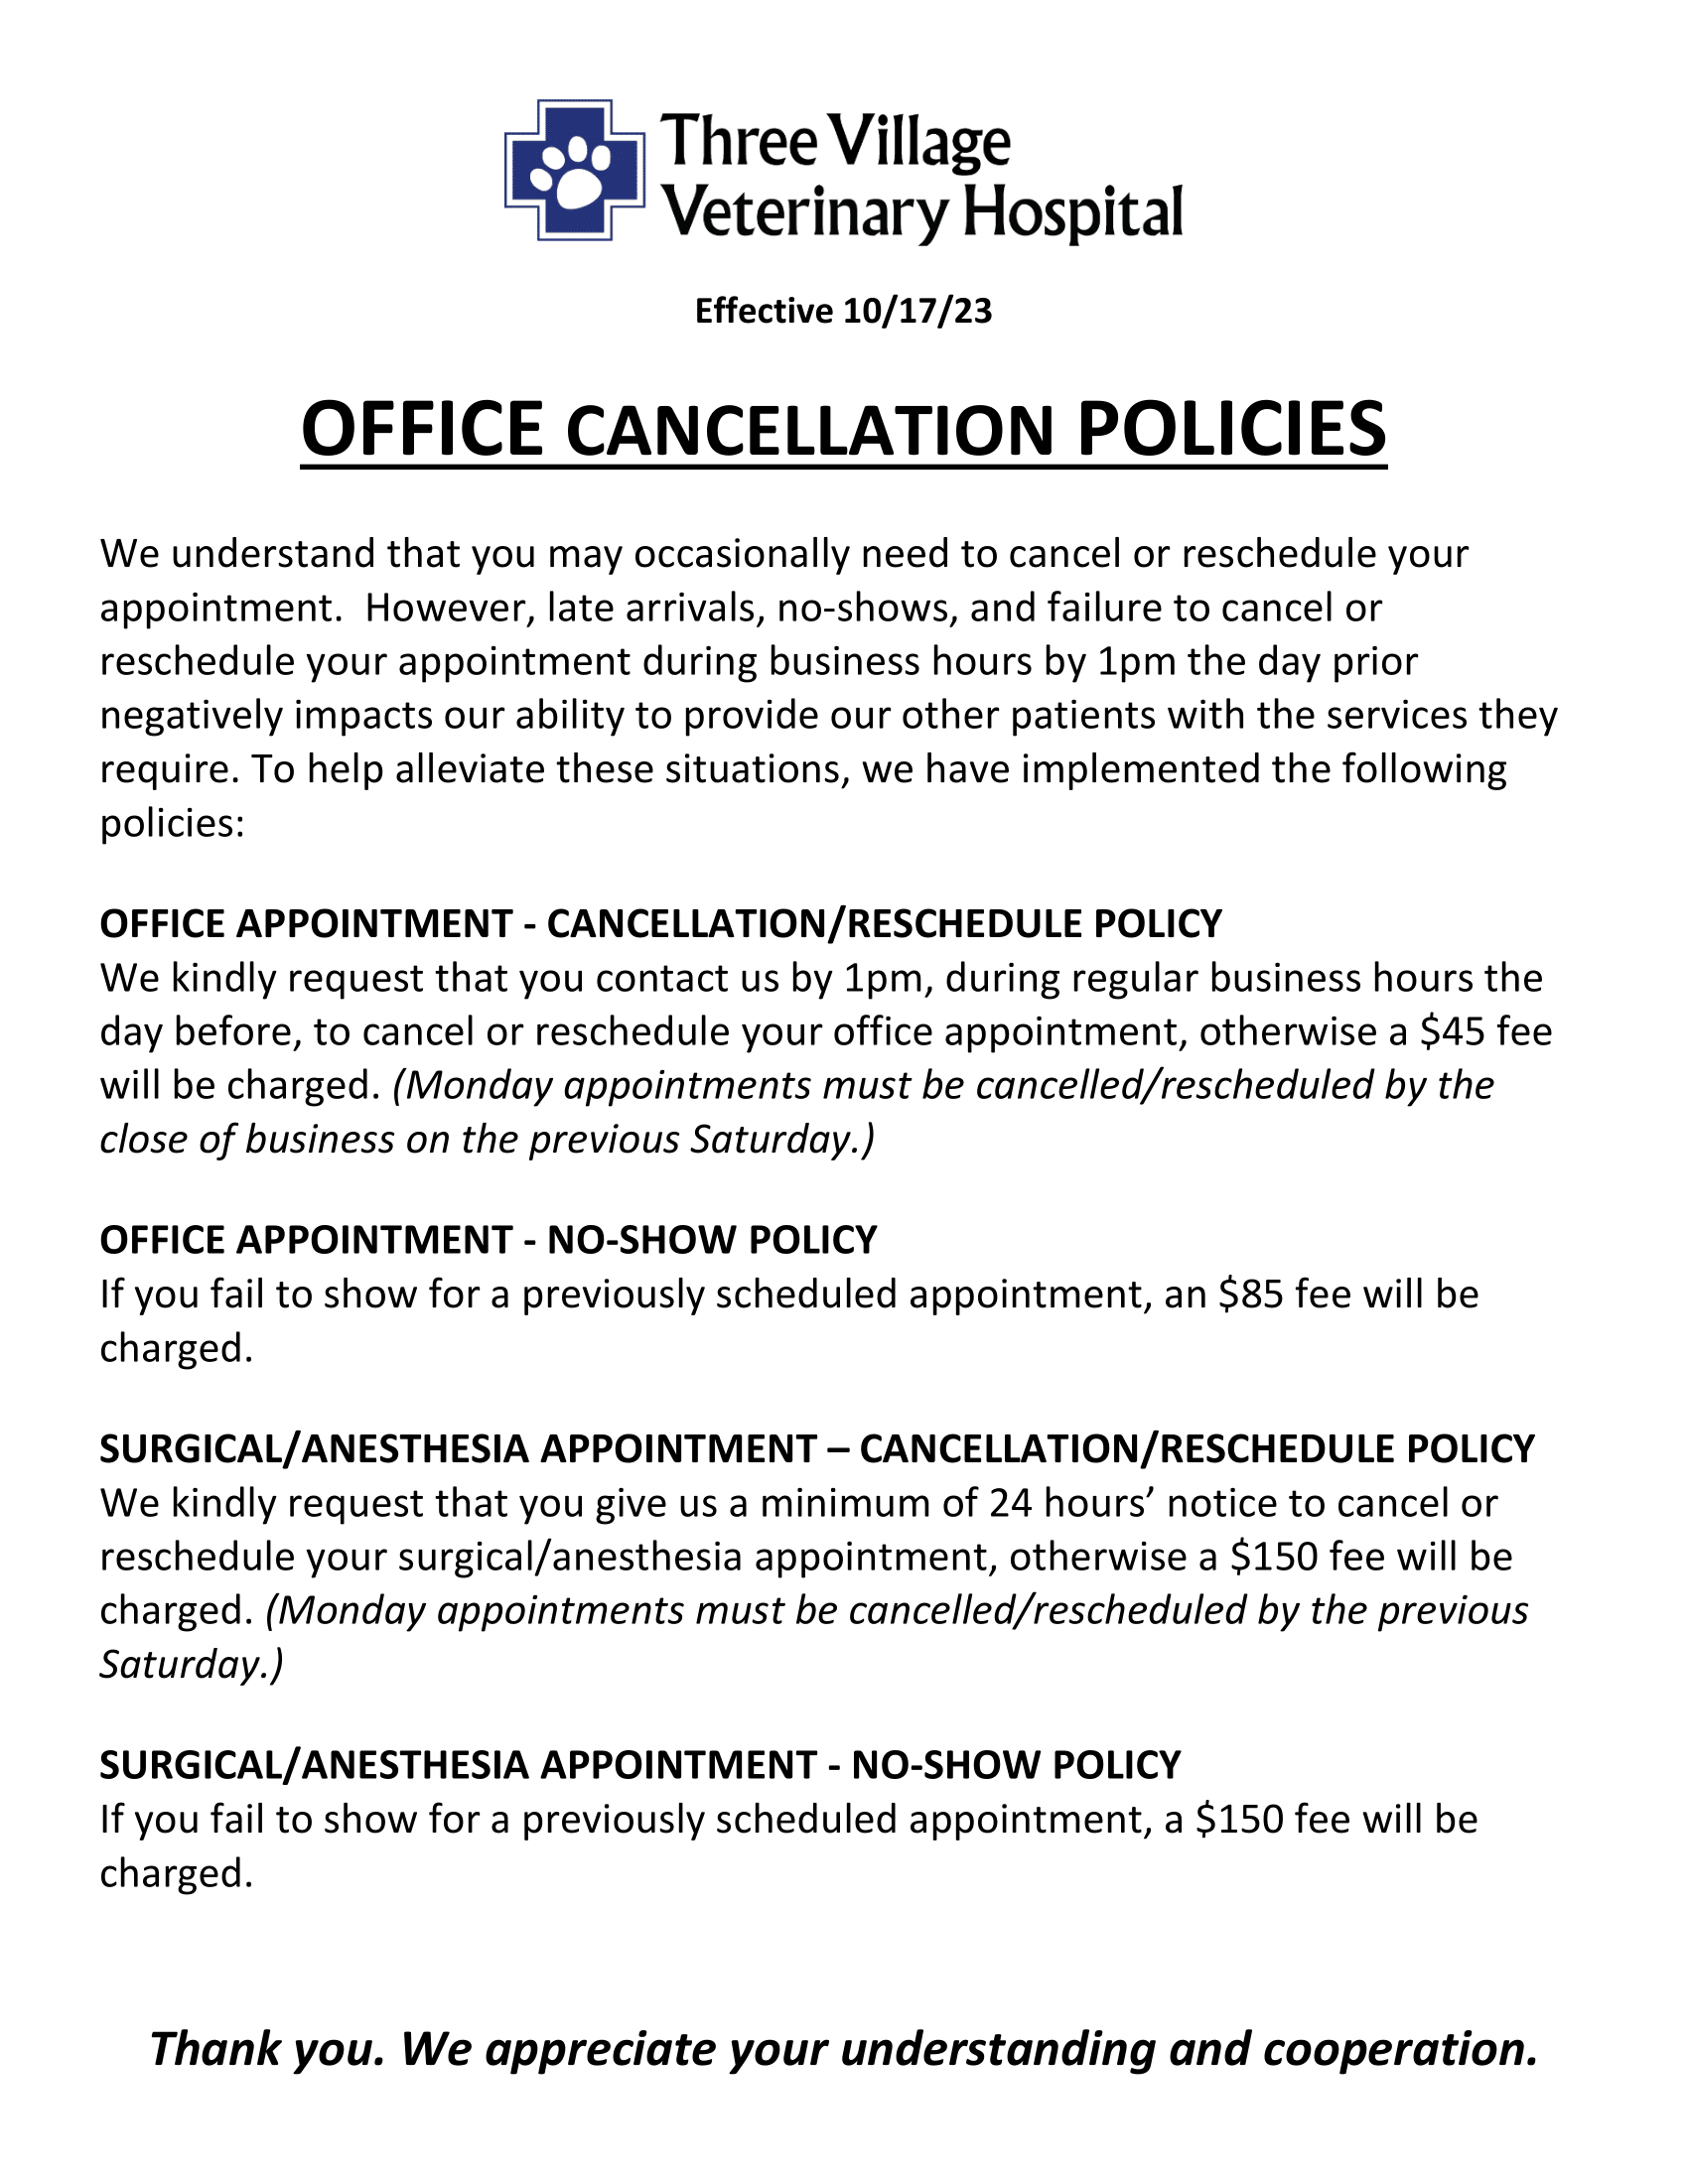 Cancel Policy